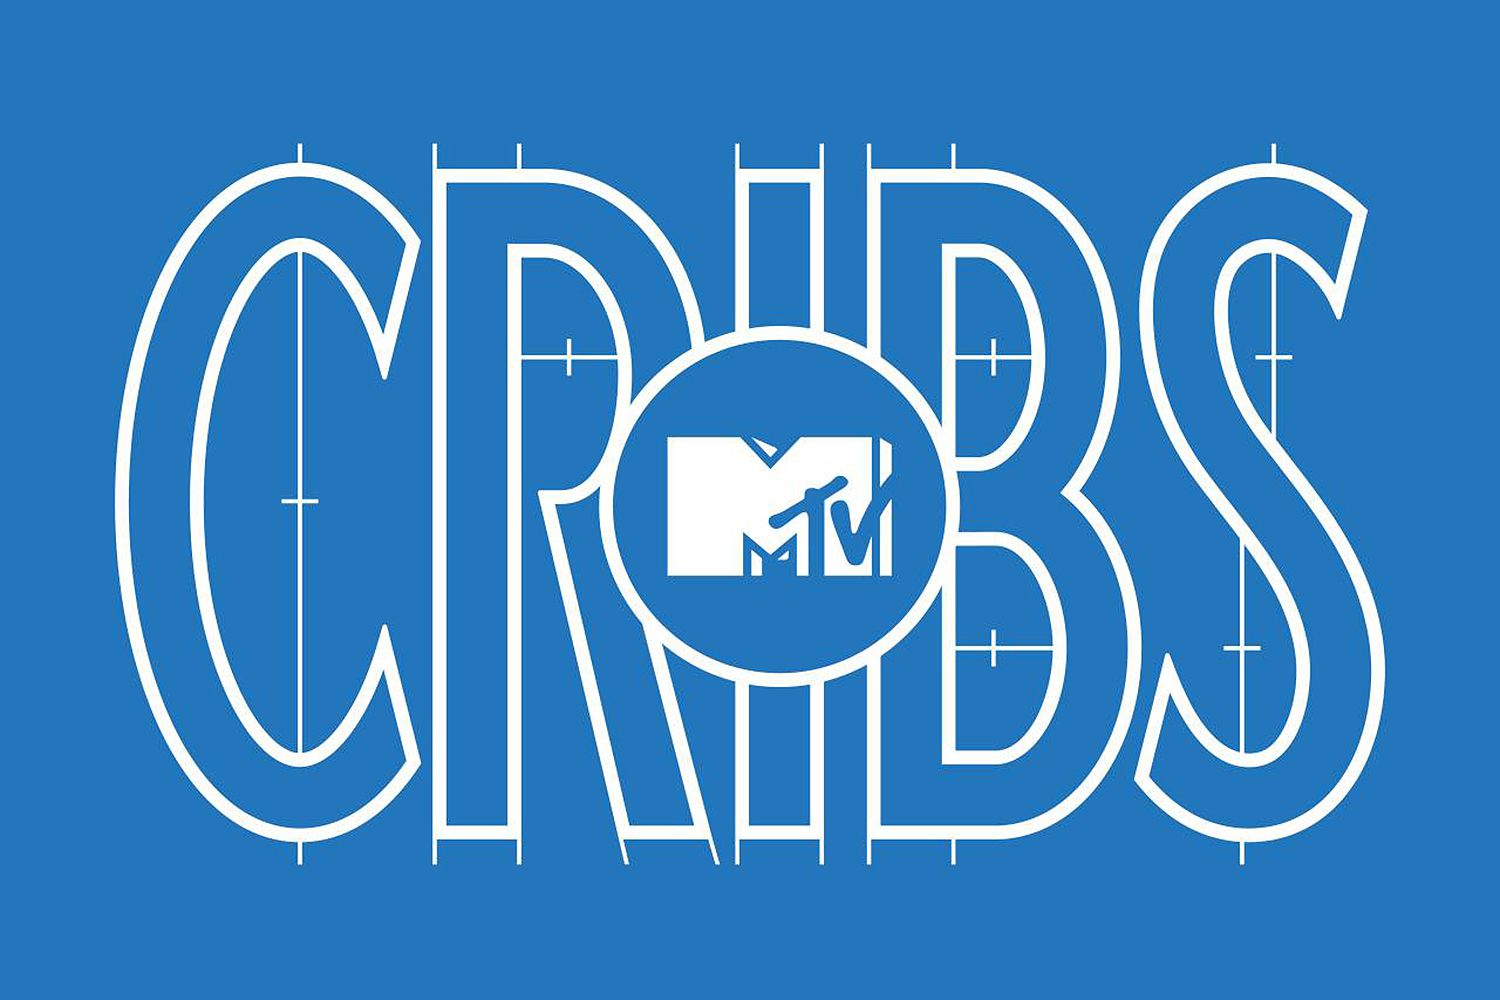 MTV Cribs Title